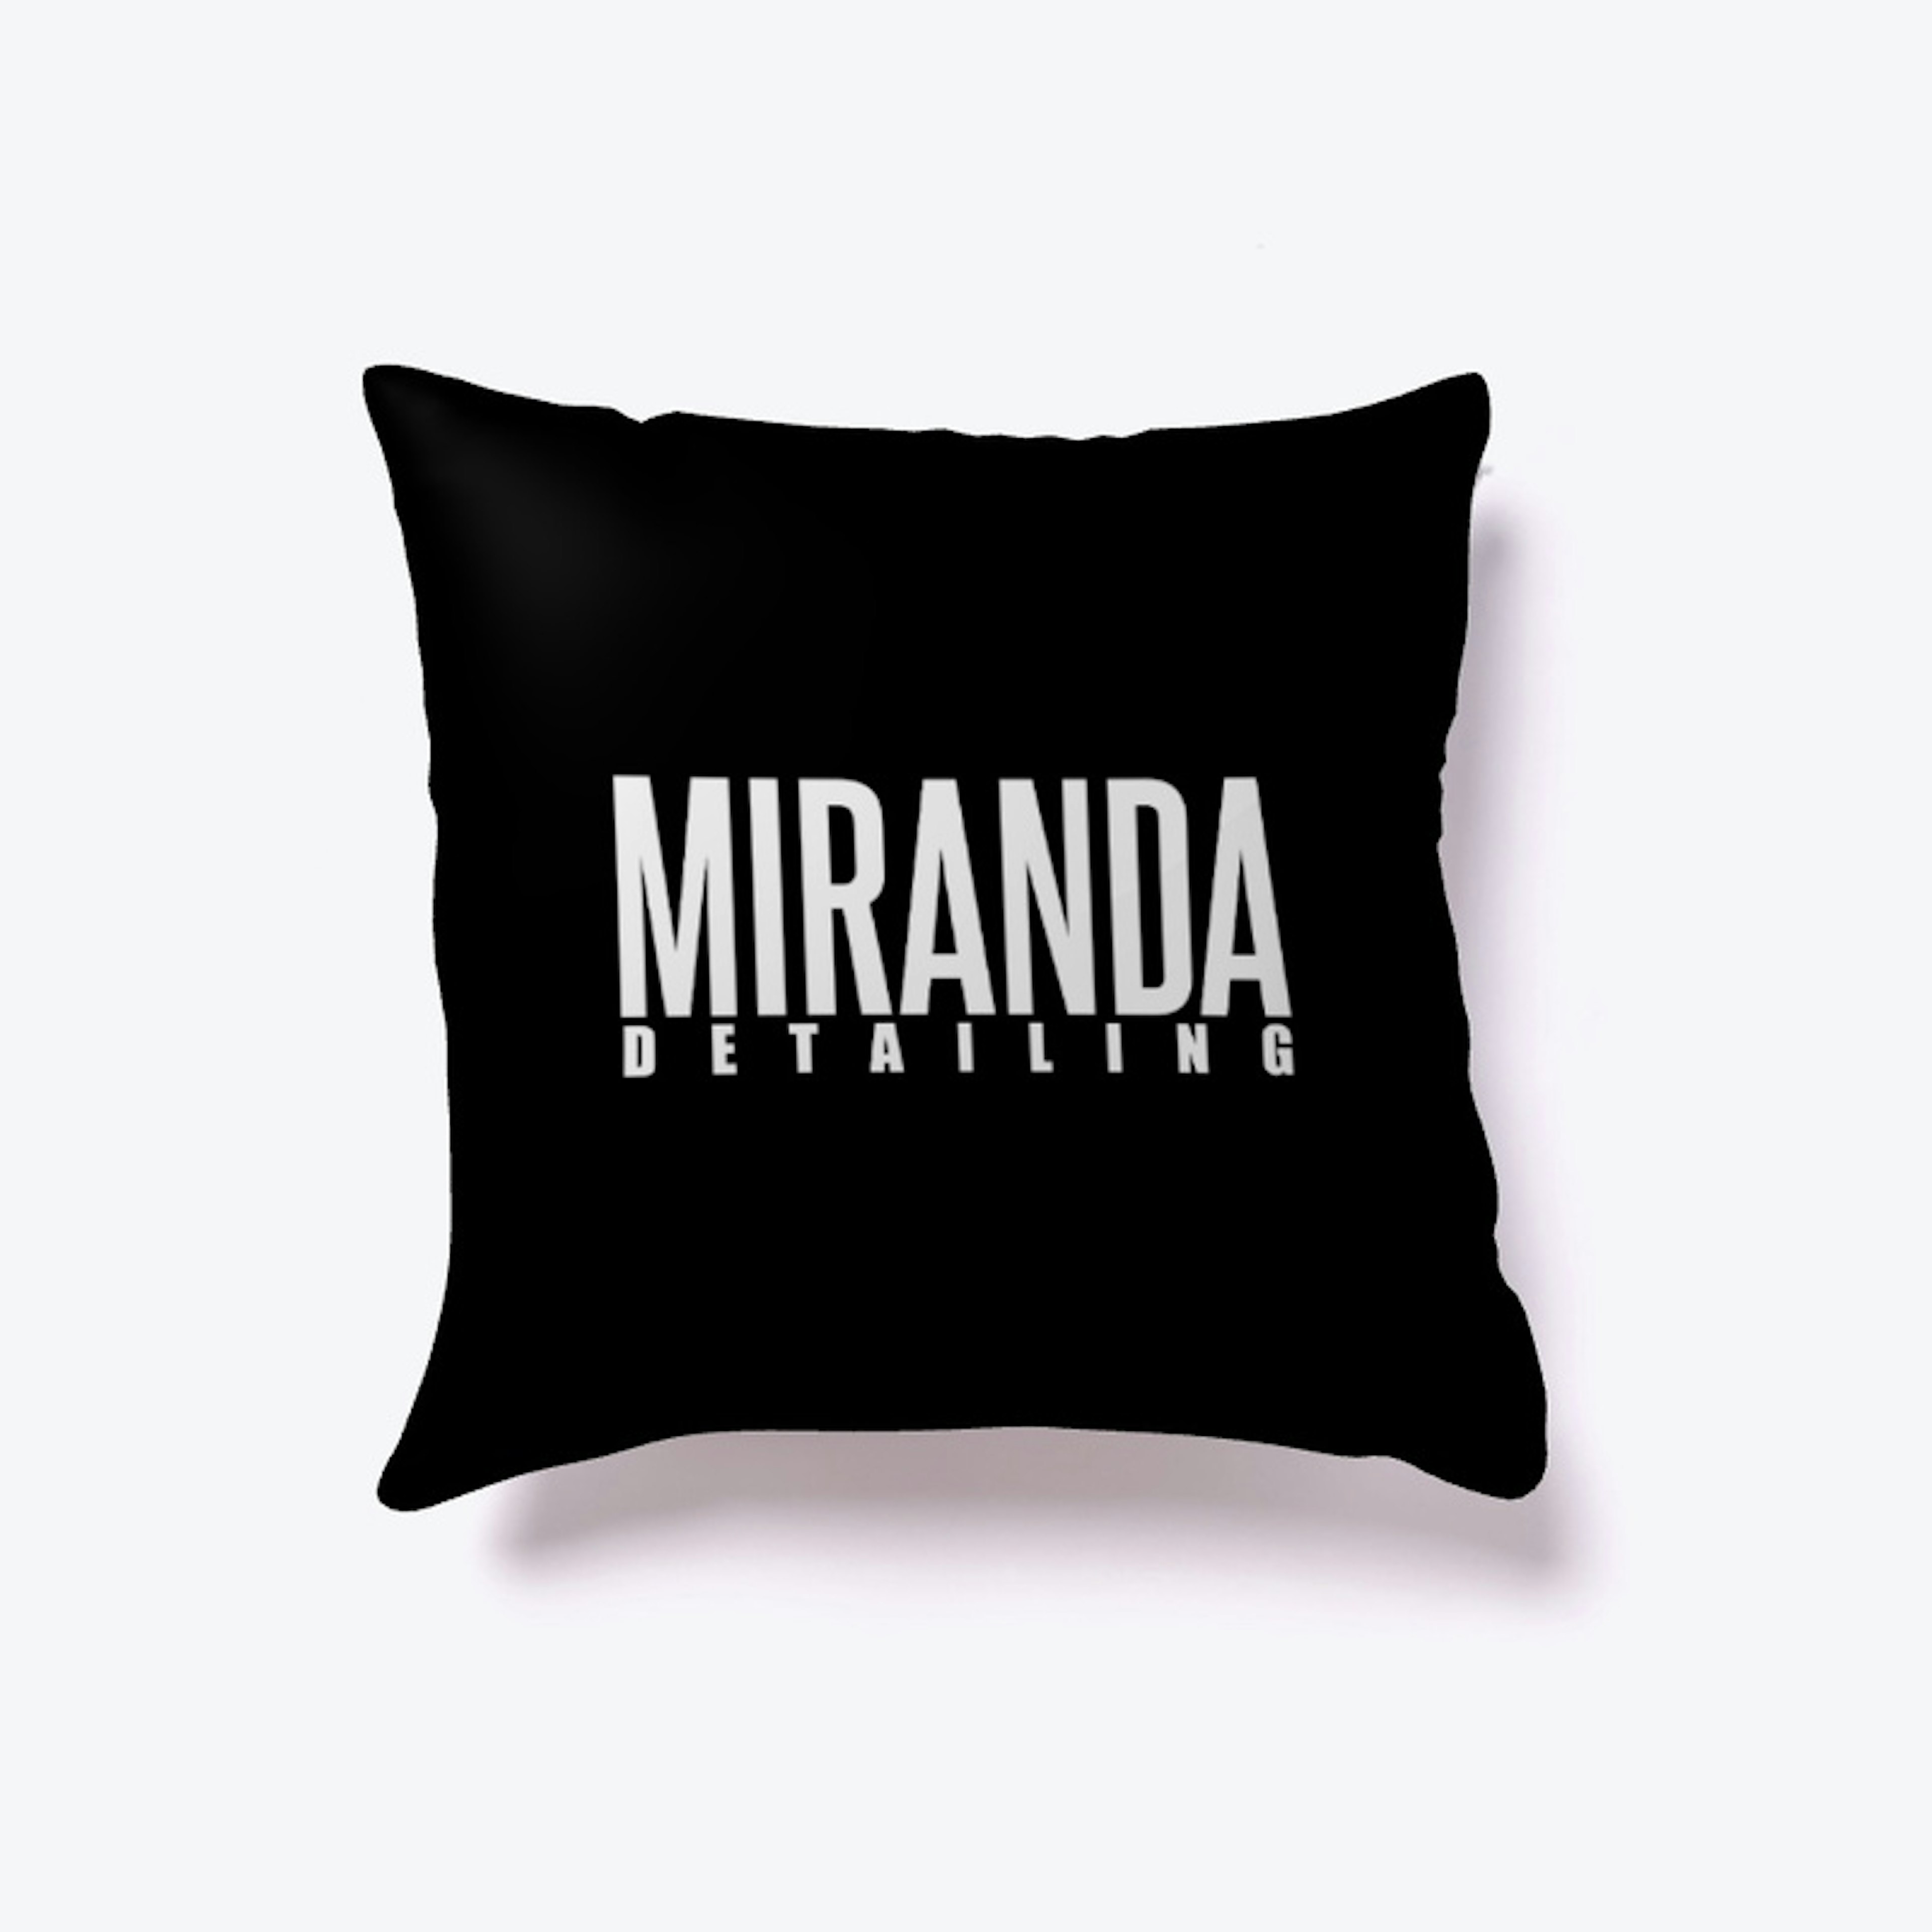 Miranda Detailing Pillow